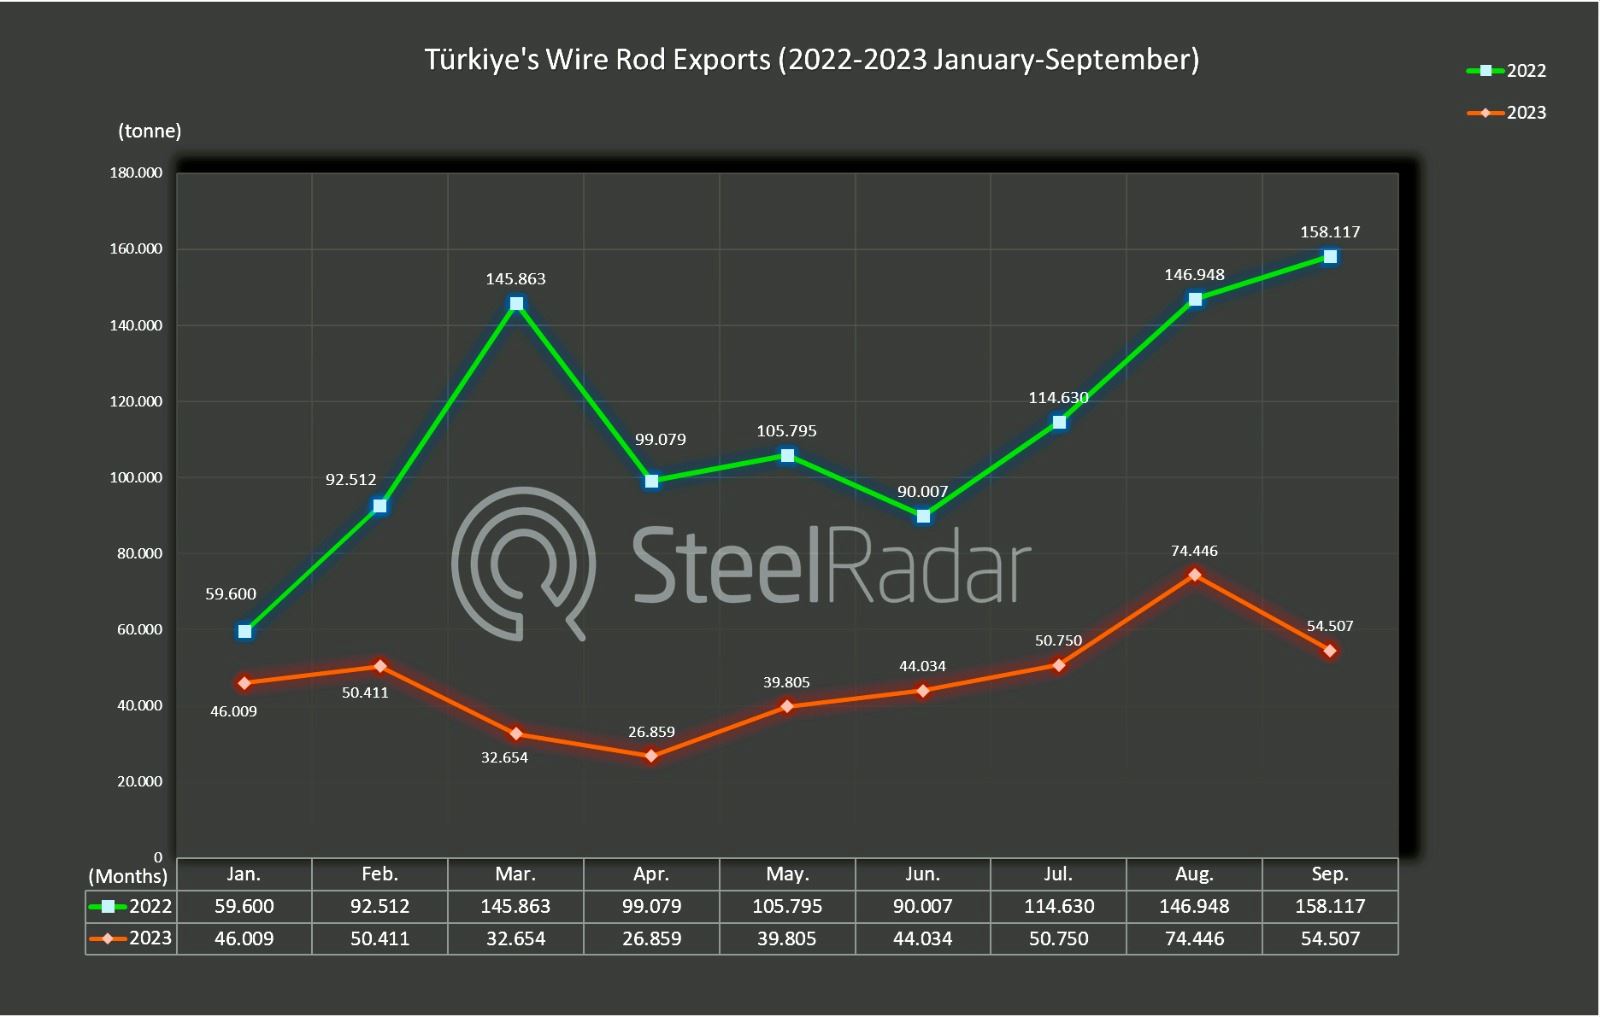 Türkiye's wire rod exports experience a sharp decline in September